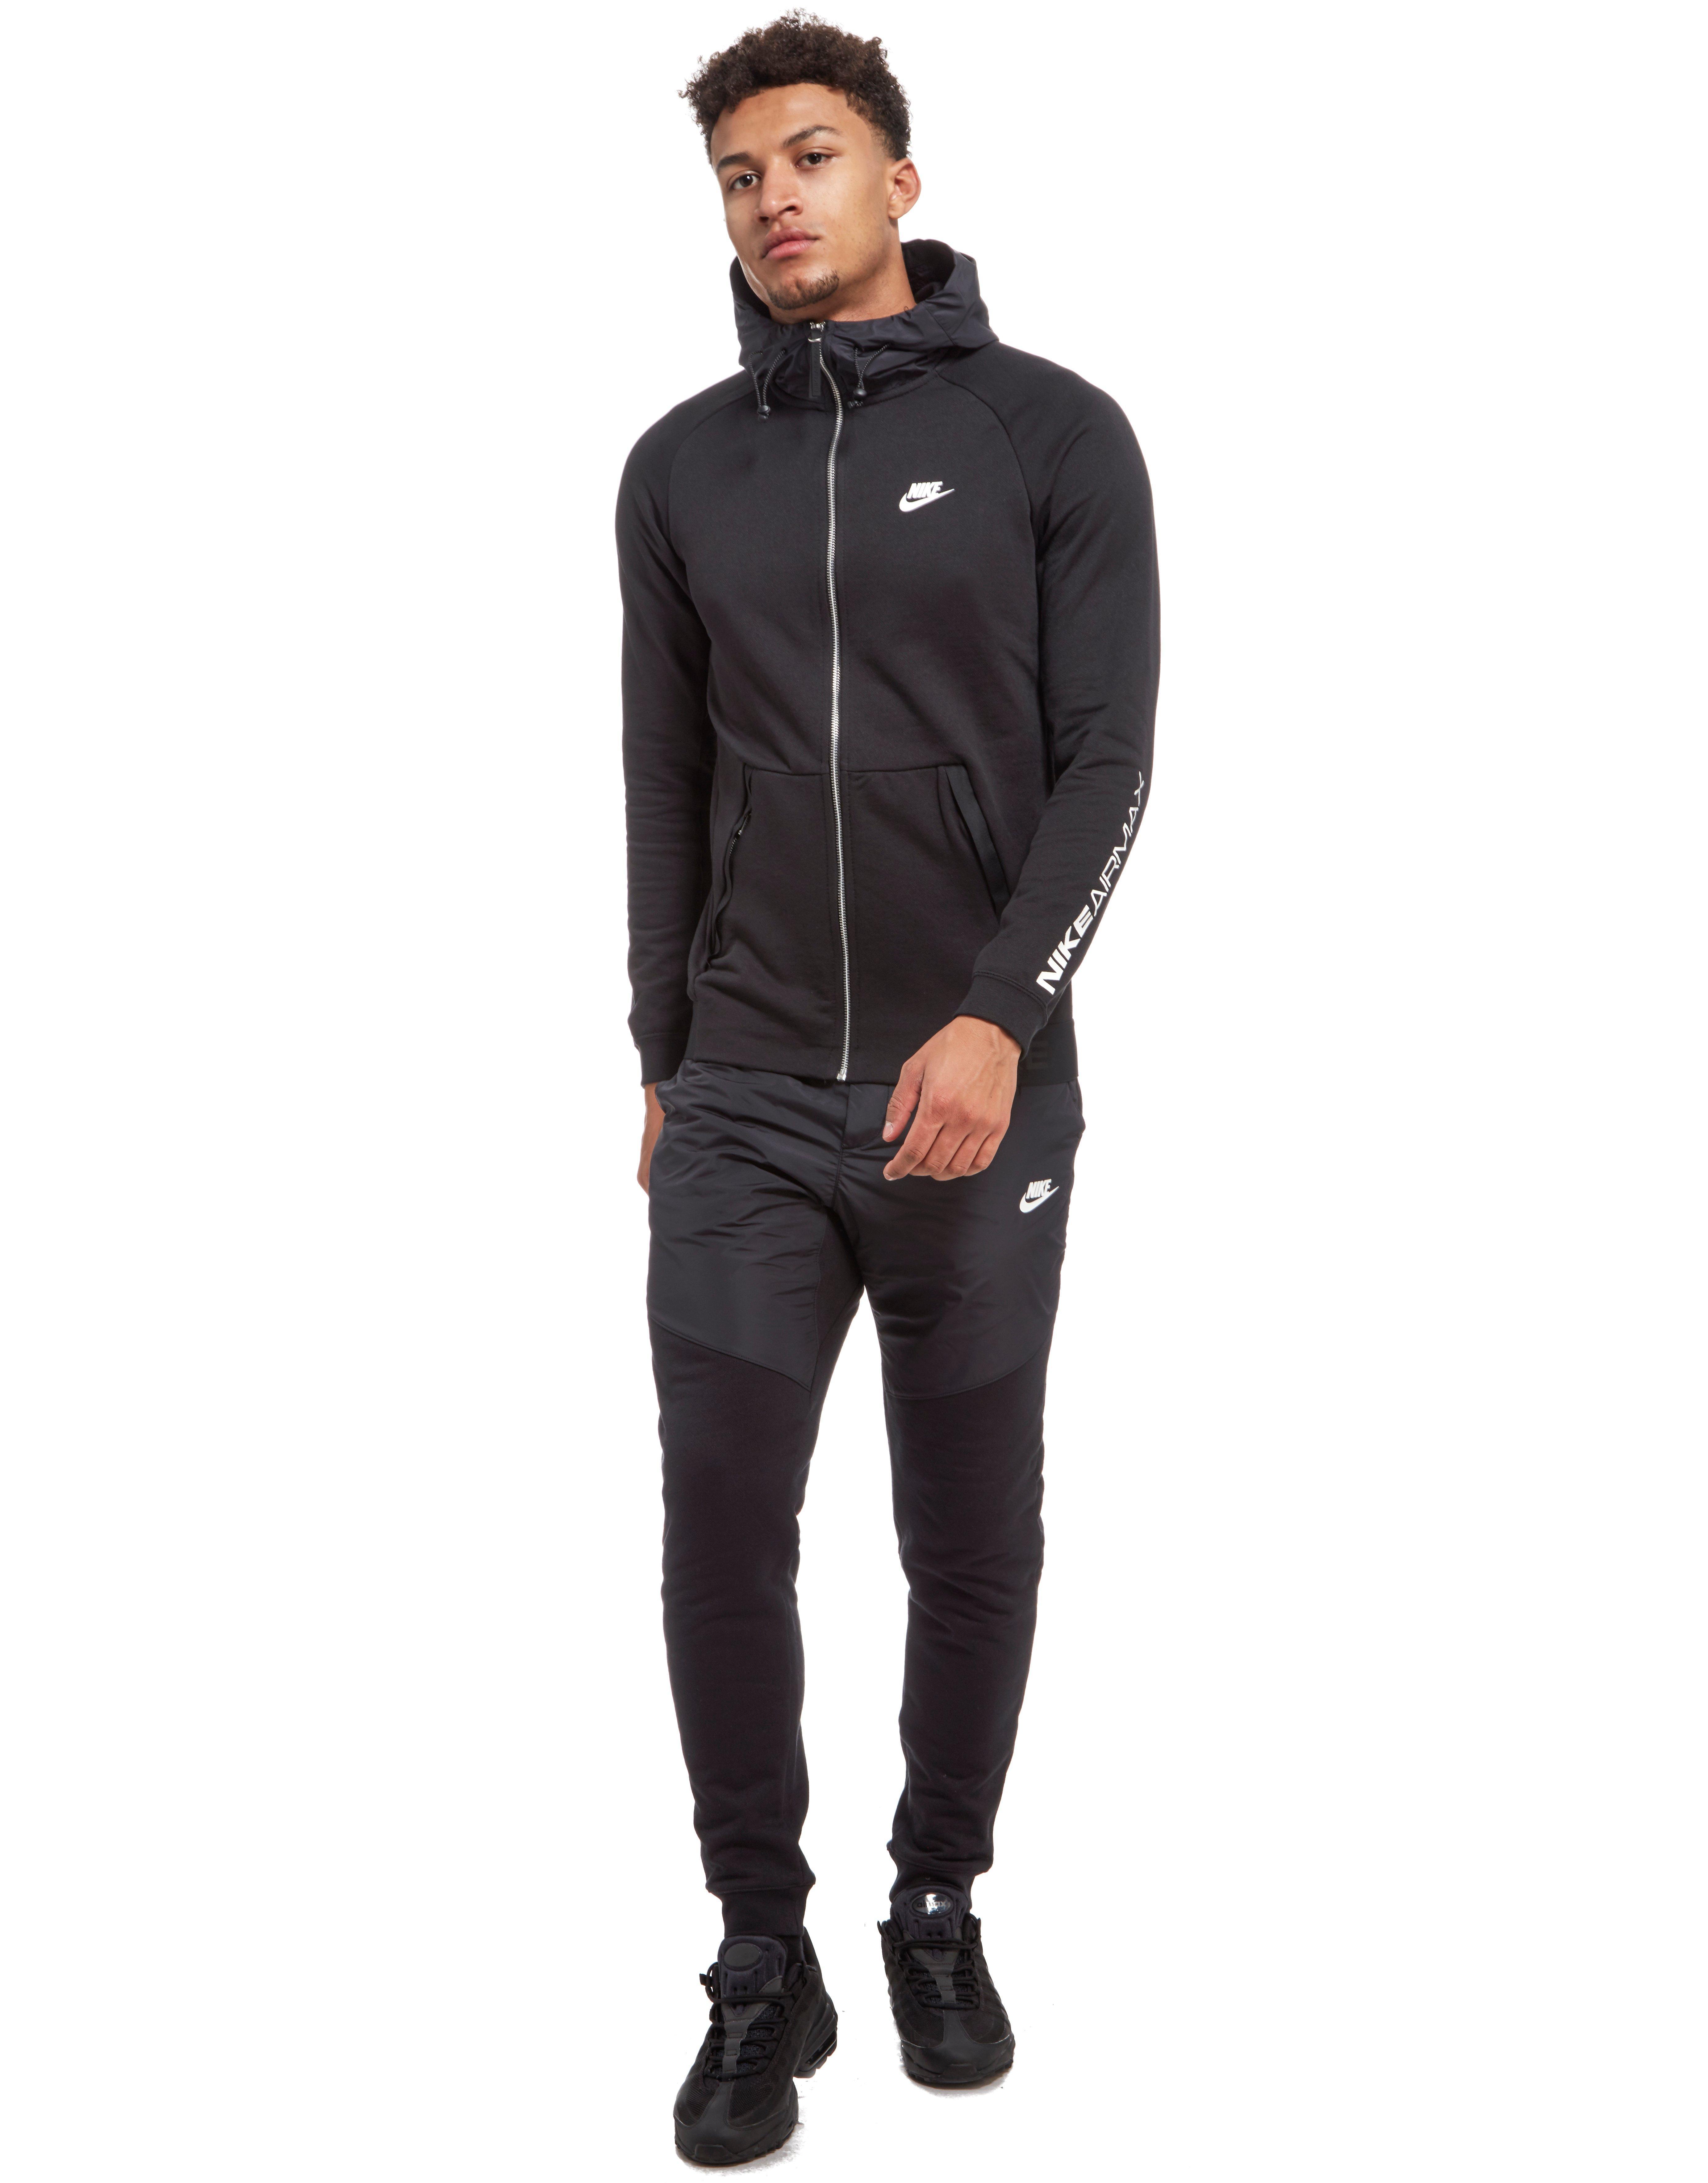 Nike Cotton Air Max Ft Full Zip Hoodie in Black for Men - Lyst